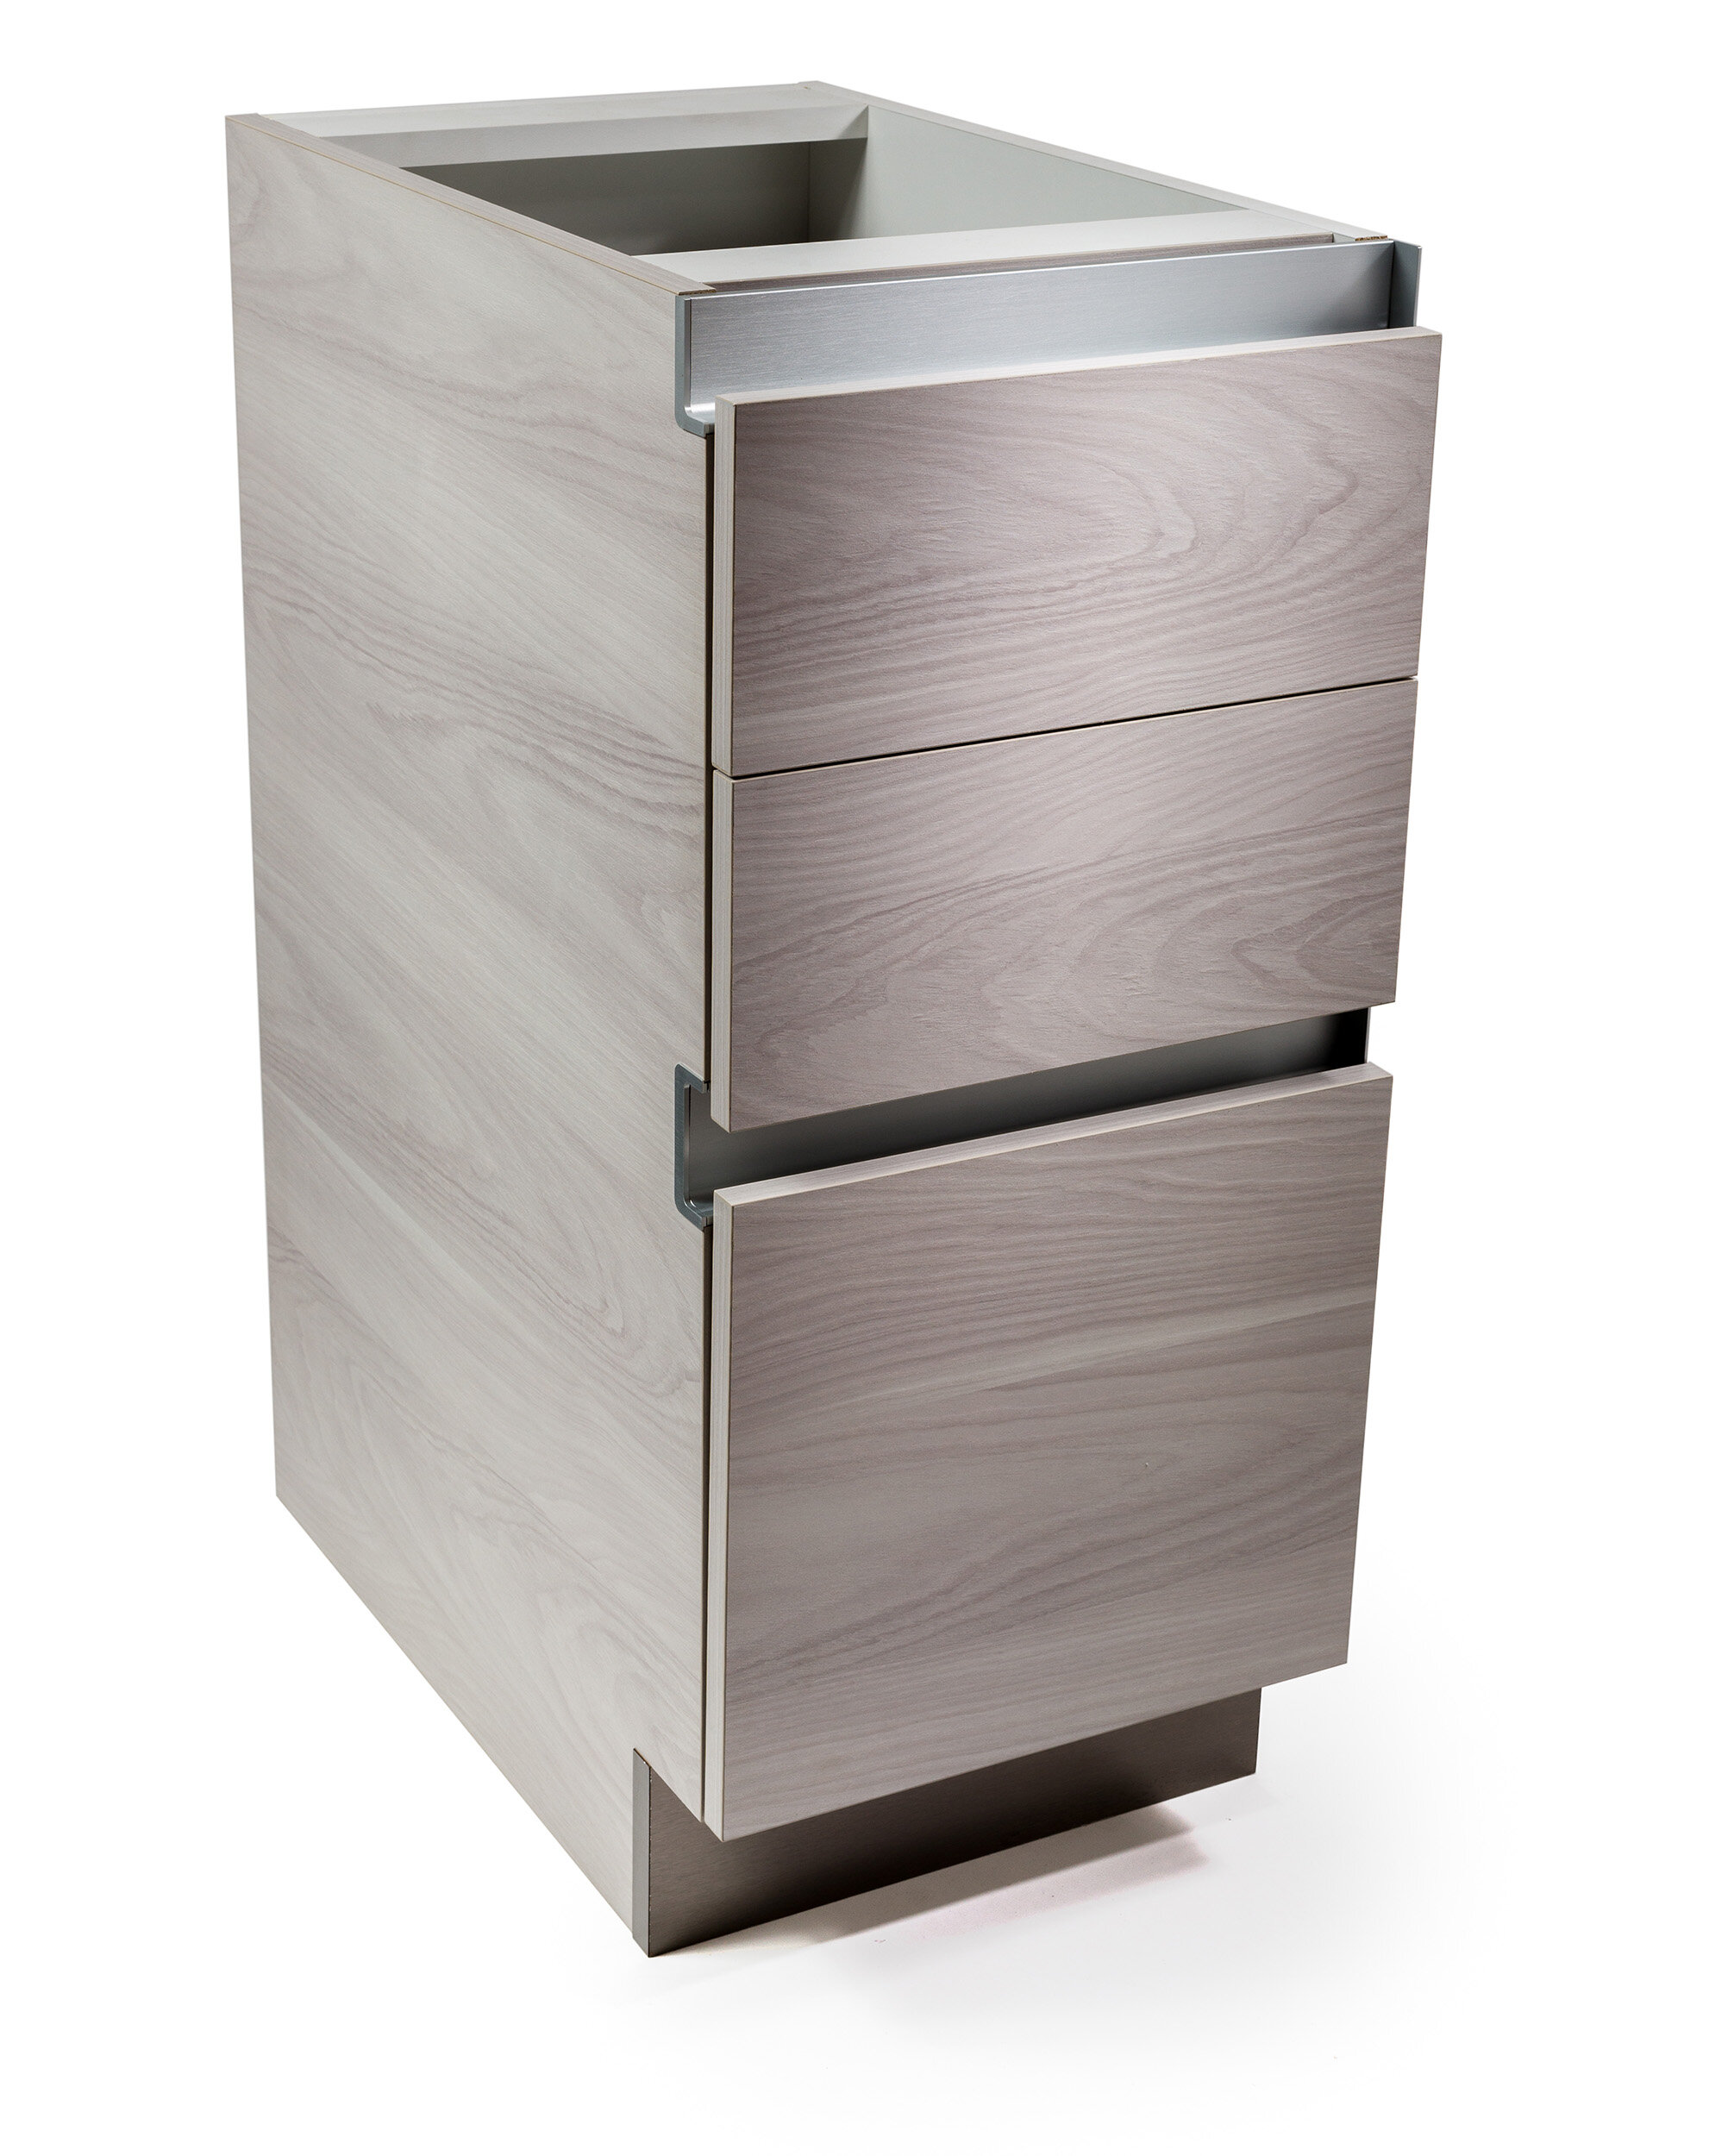 spectra-spec-cabinet-drawers.jpg